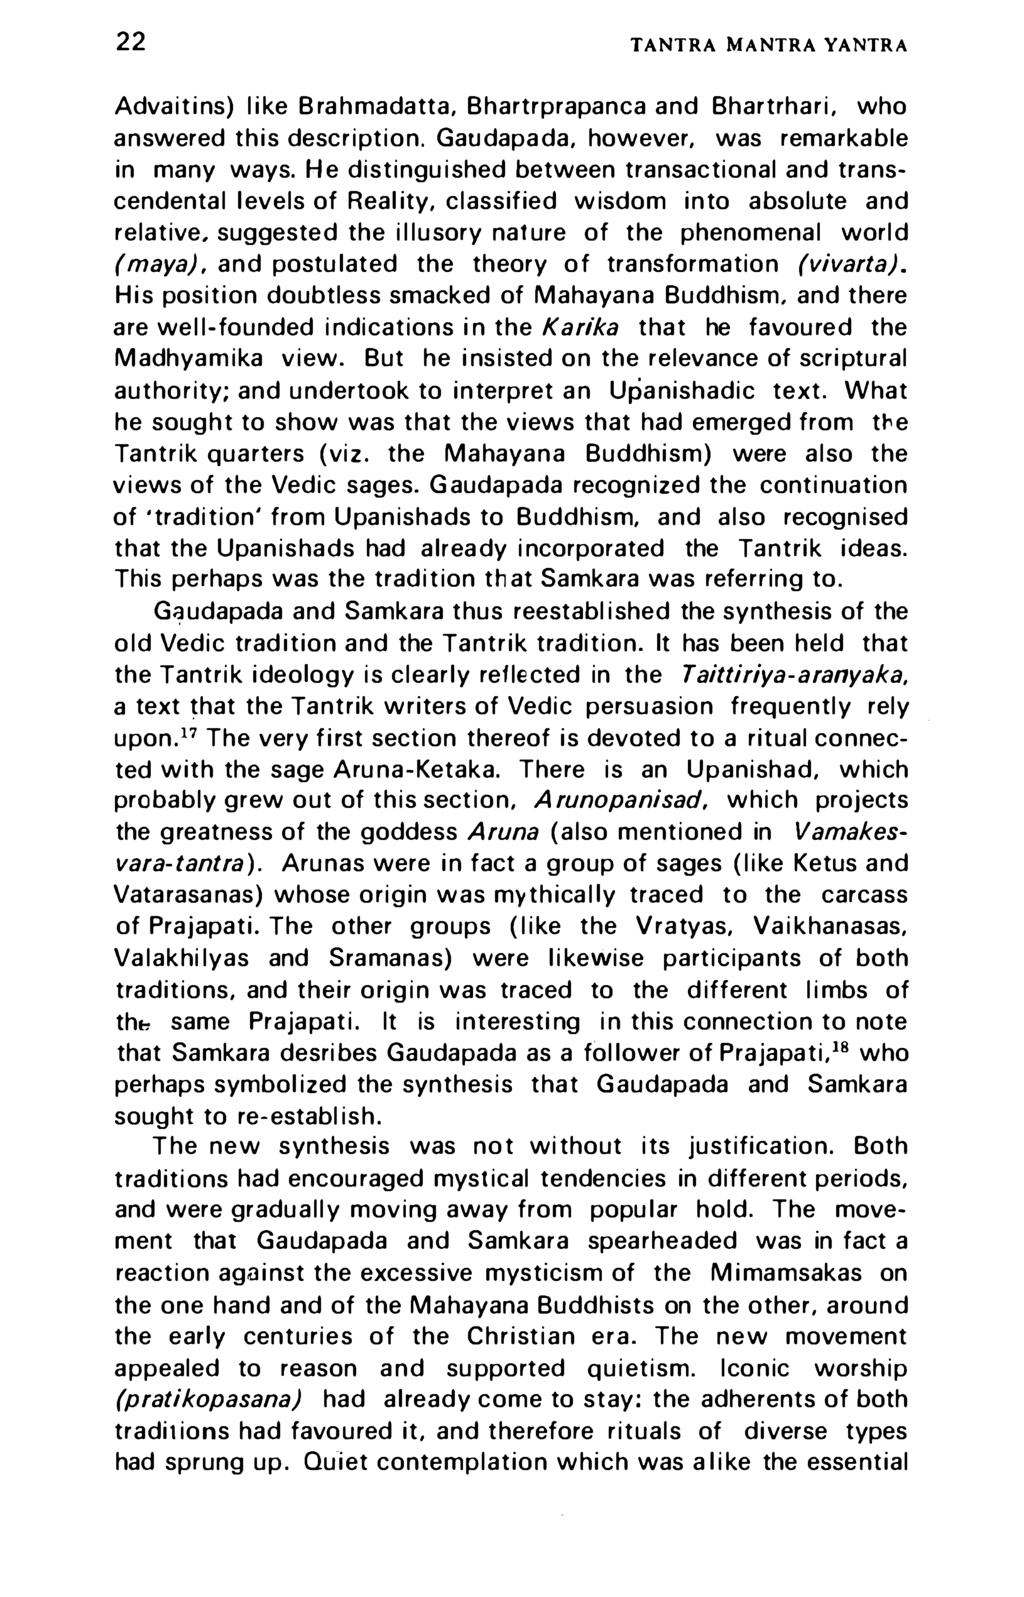 22 Tantra Mantra yantra Advaitins) like Brahmadatta, Bhartrprapanca and Bhartrhari, who answered this description. Gaudapada, however, was remarkable in many ways.